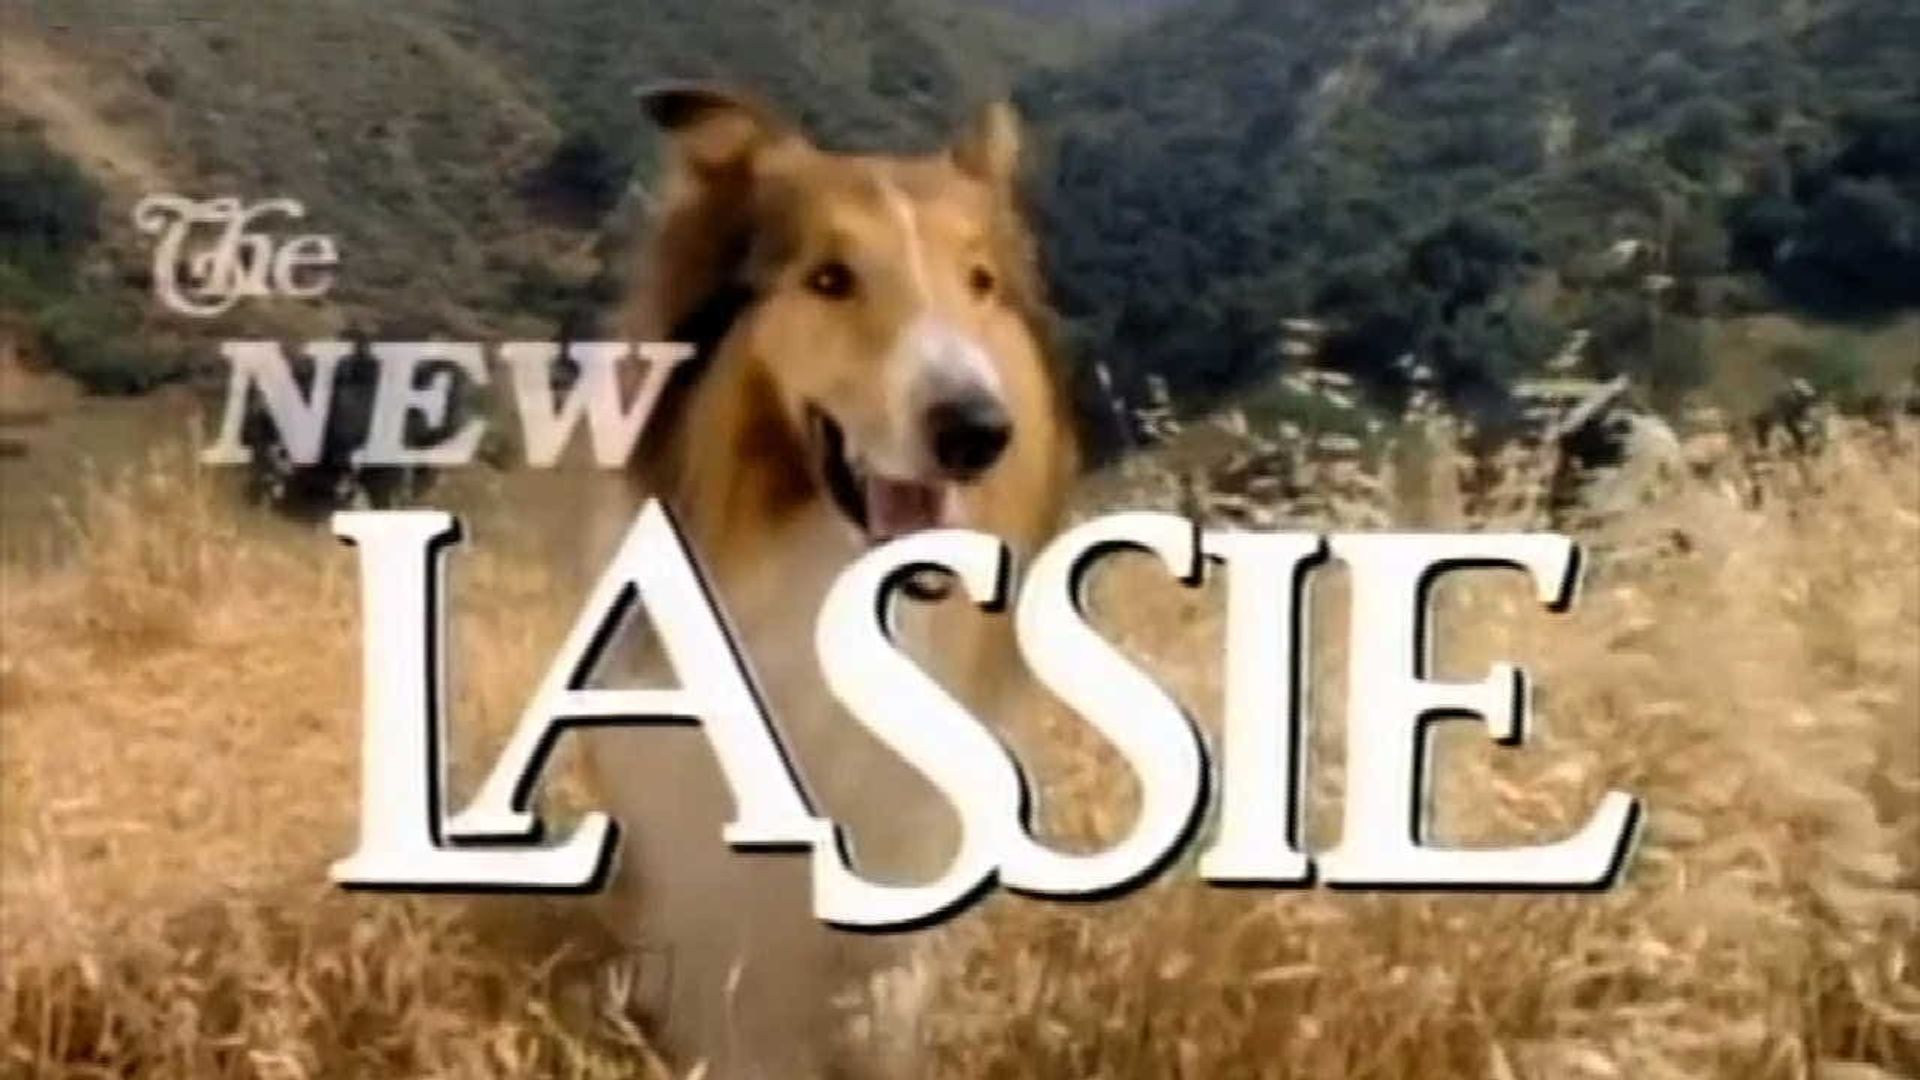 The New Lassie background